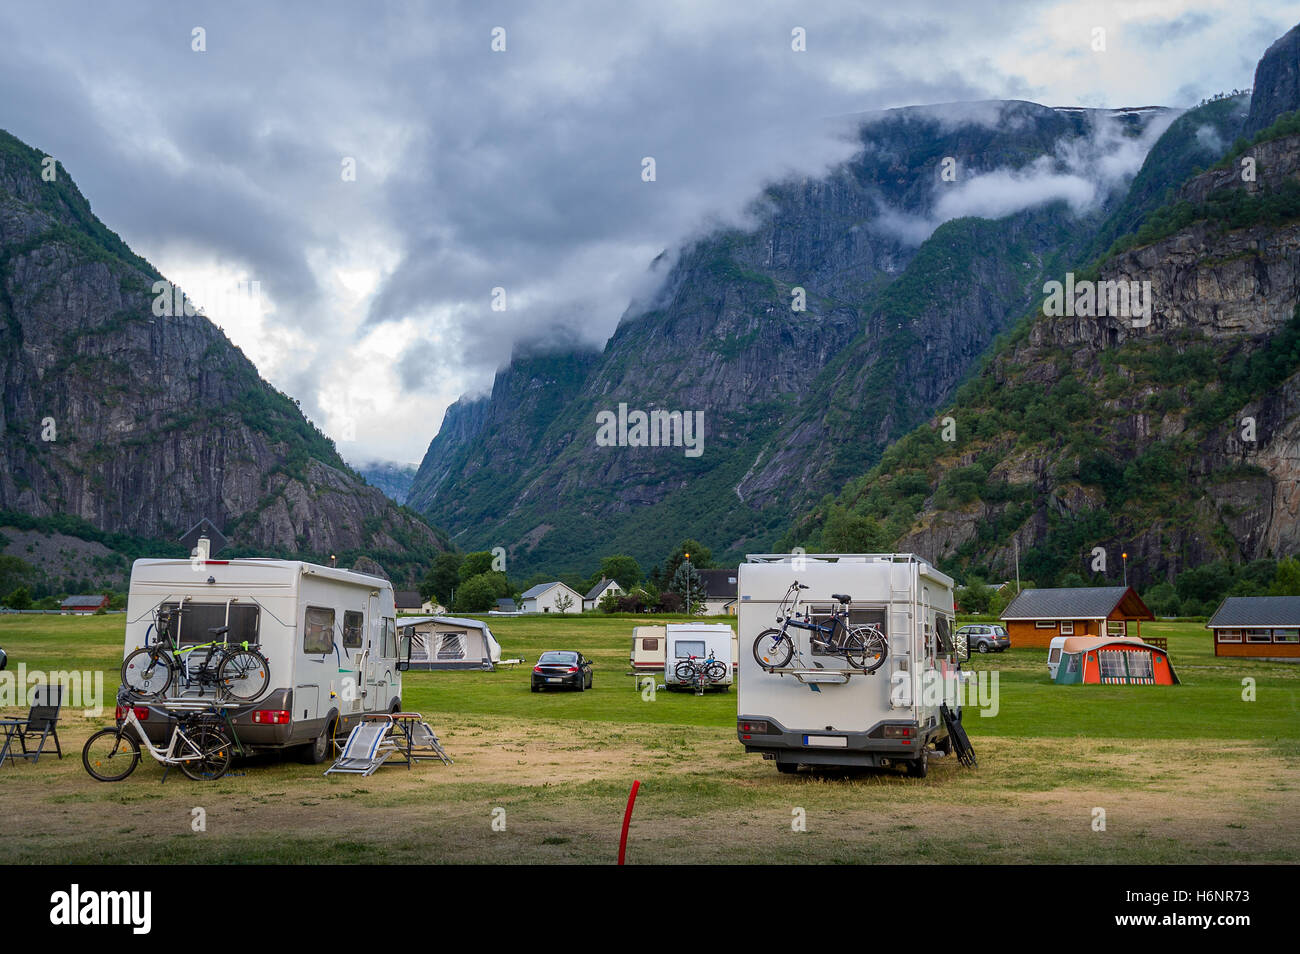 Camper vetture al bellissimo paesaggio montano di Eidfjord, Norvegia Foto Stock